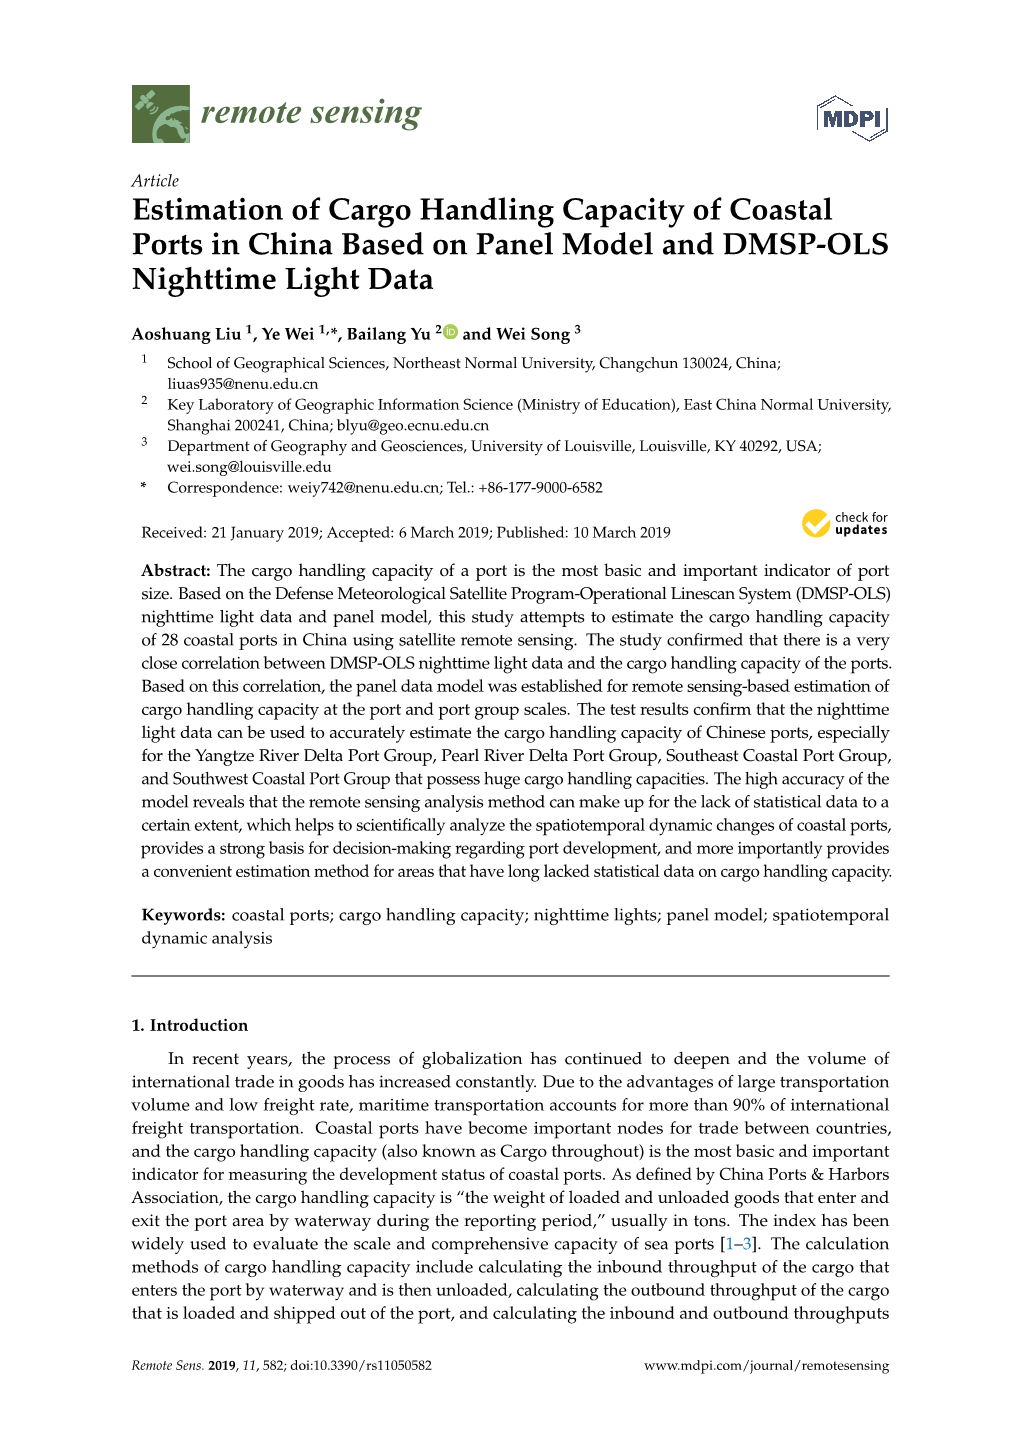 Estimation of Cargo Handling Capacity of Coastal Ports in China Based on Panel Model and DMSP-OLS Nighttime Light Data